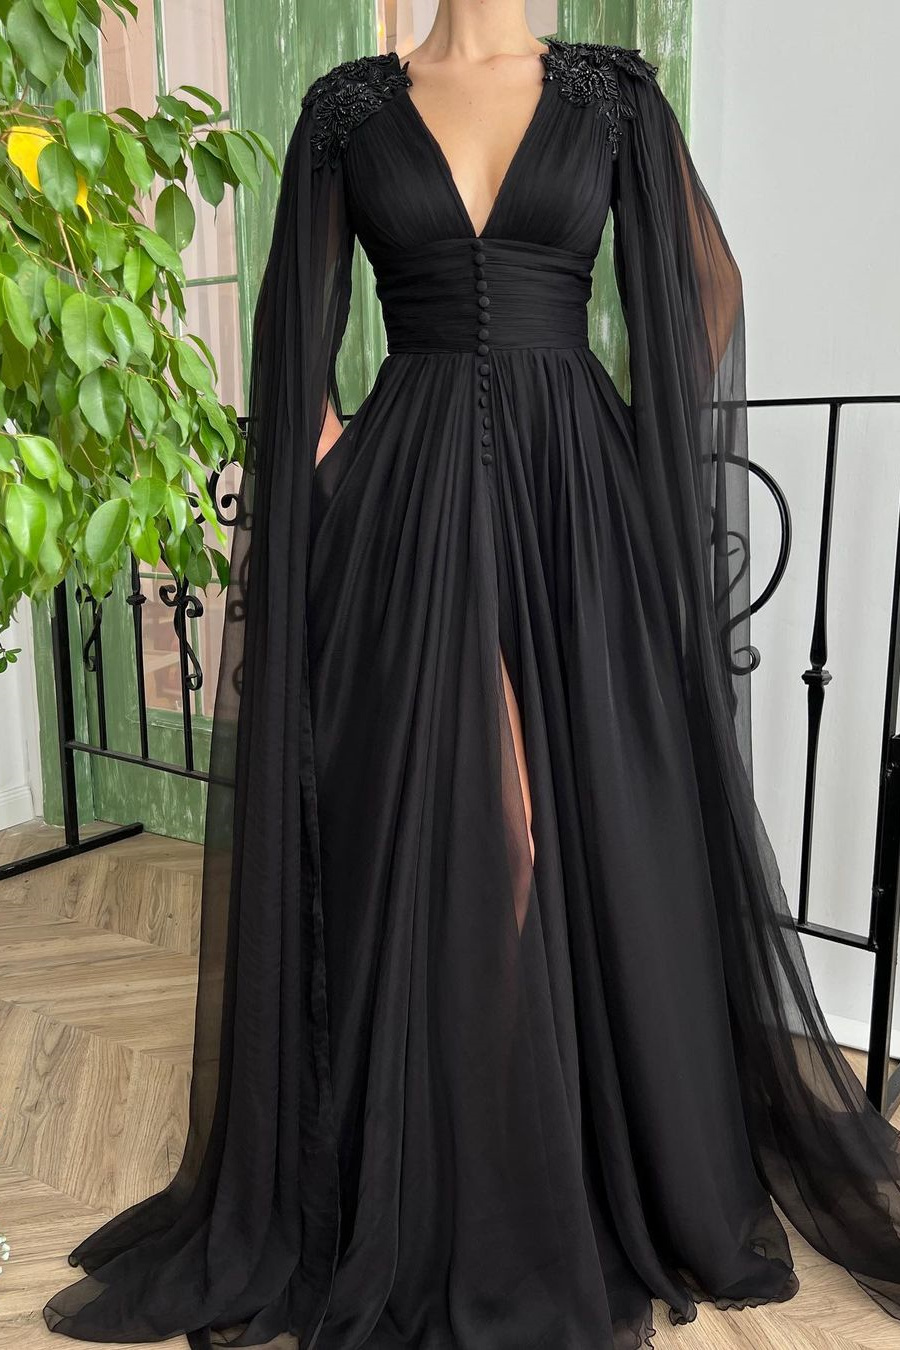 Oknass Elegant Black Deep V Neck Tulle Maxi Cocktail Evening Party Dress Front Slit Ruffle Sleeves